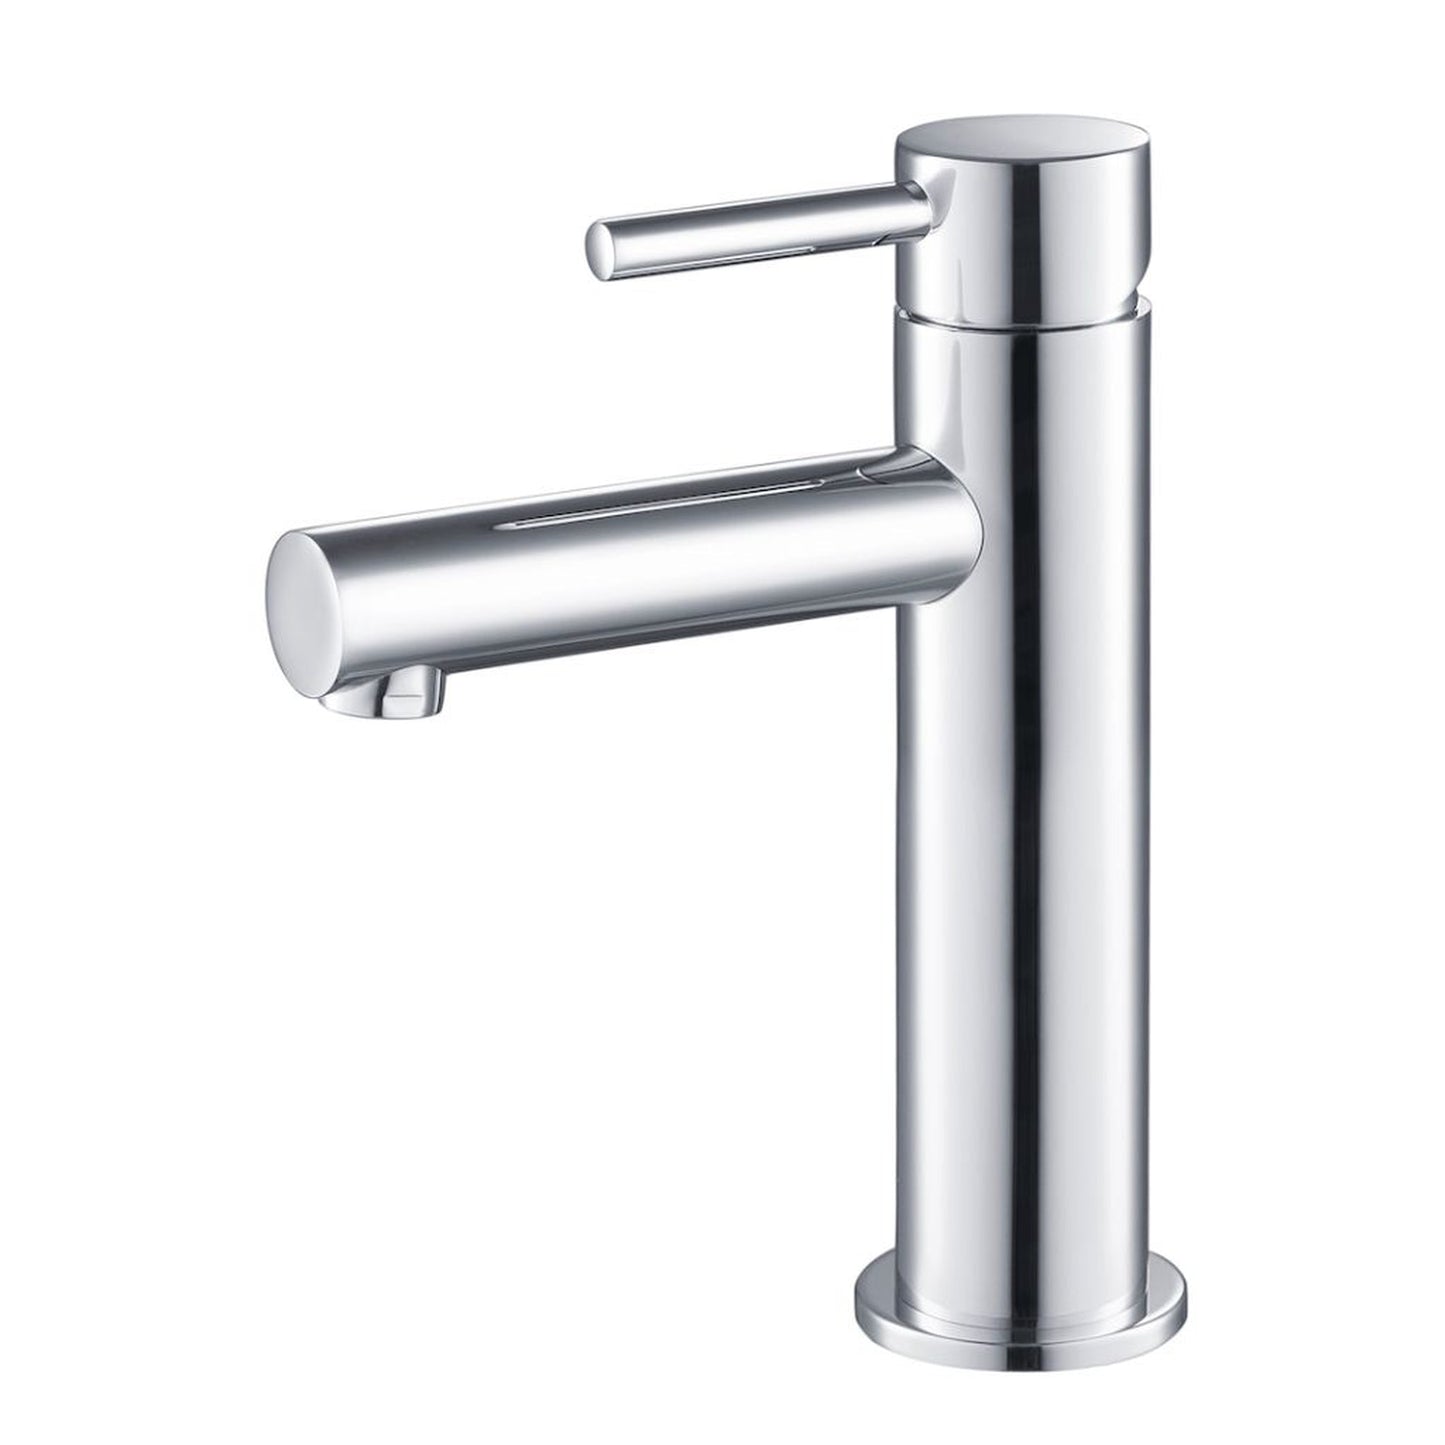 Blossom F01 116 4" x 7" Chrome Lever Handle Bathroom Sink Single Hole Faucet